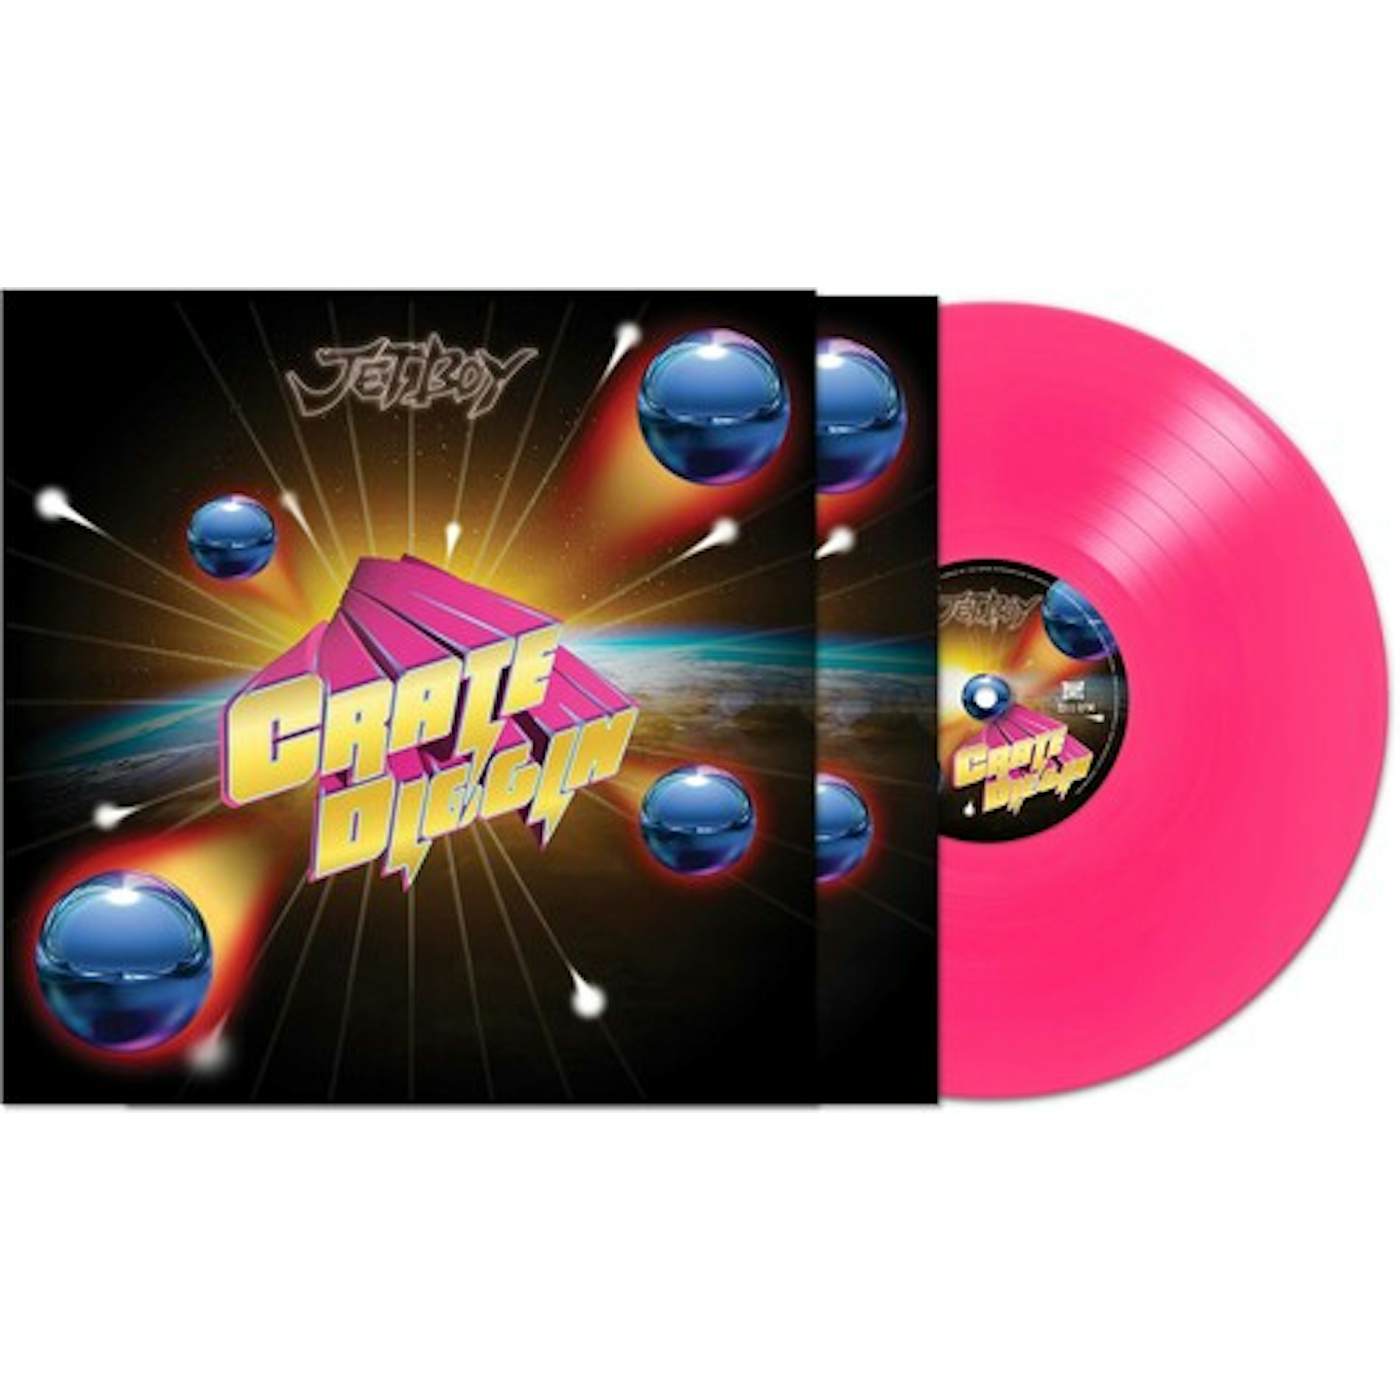 Jetboy CRATE DIGGIN' - PINK Vinyl Record